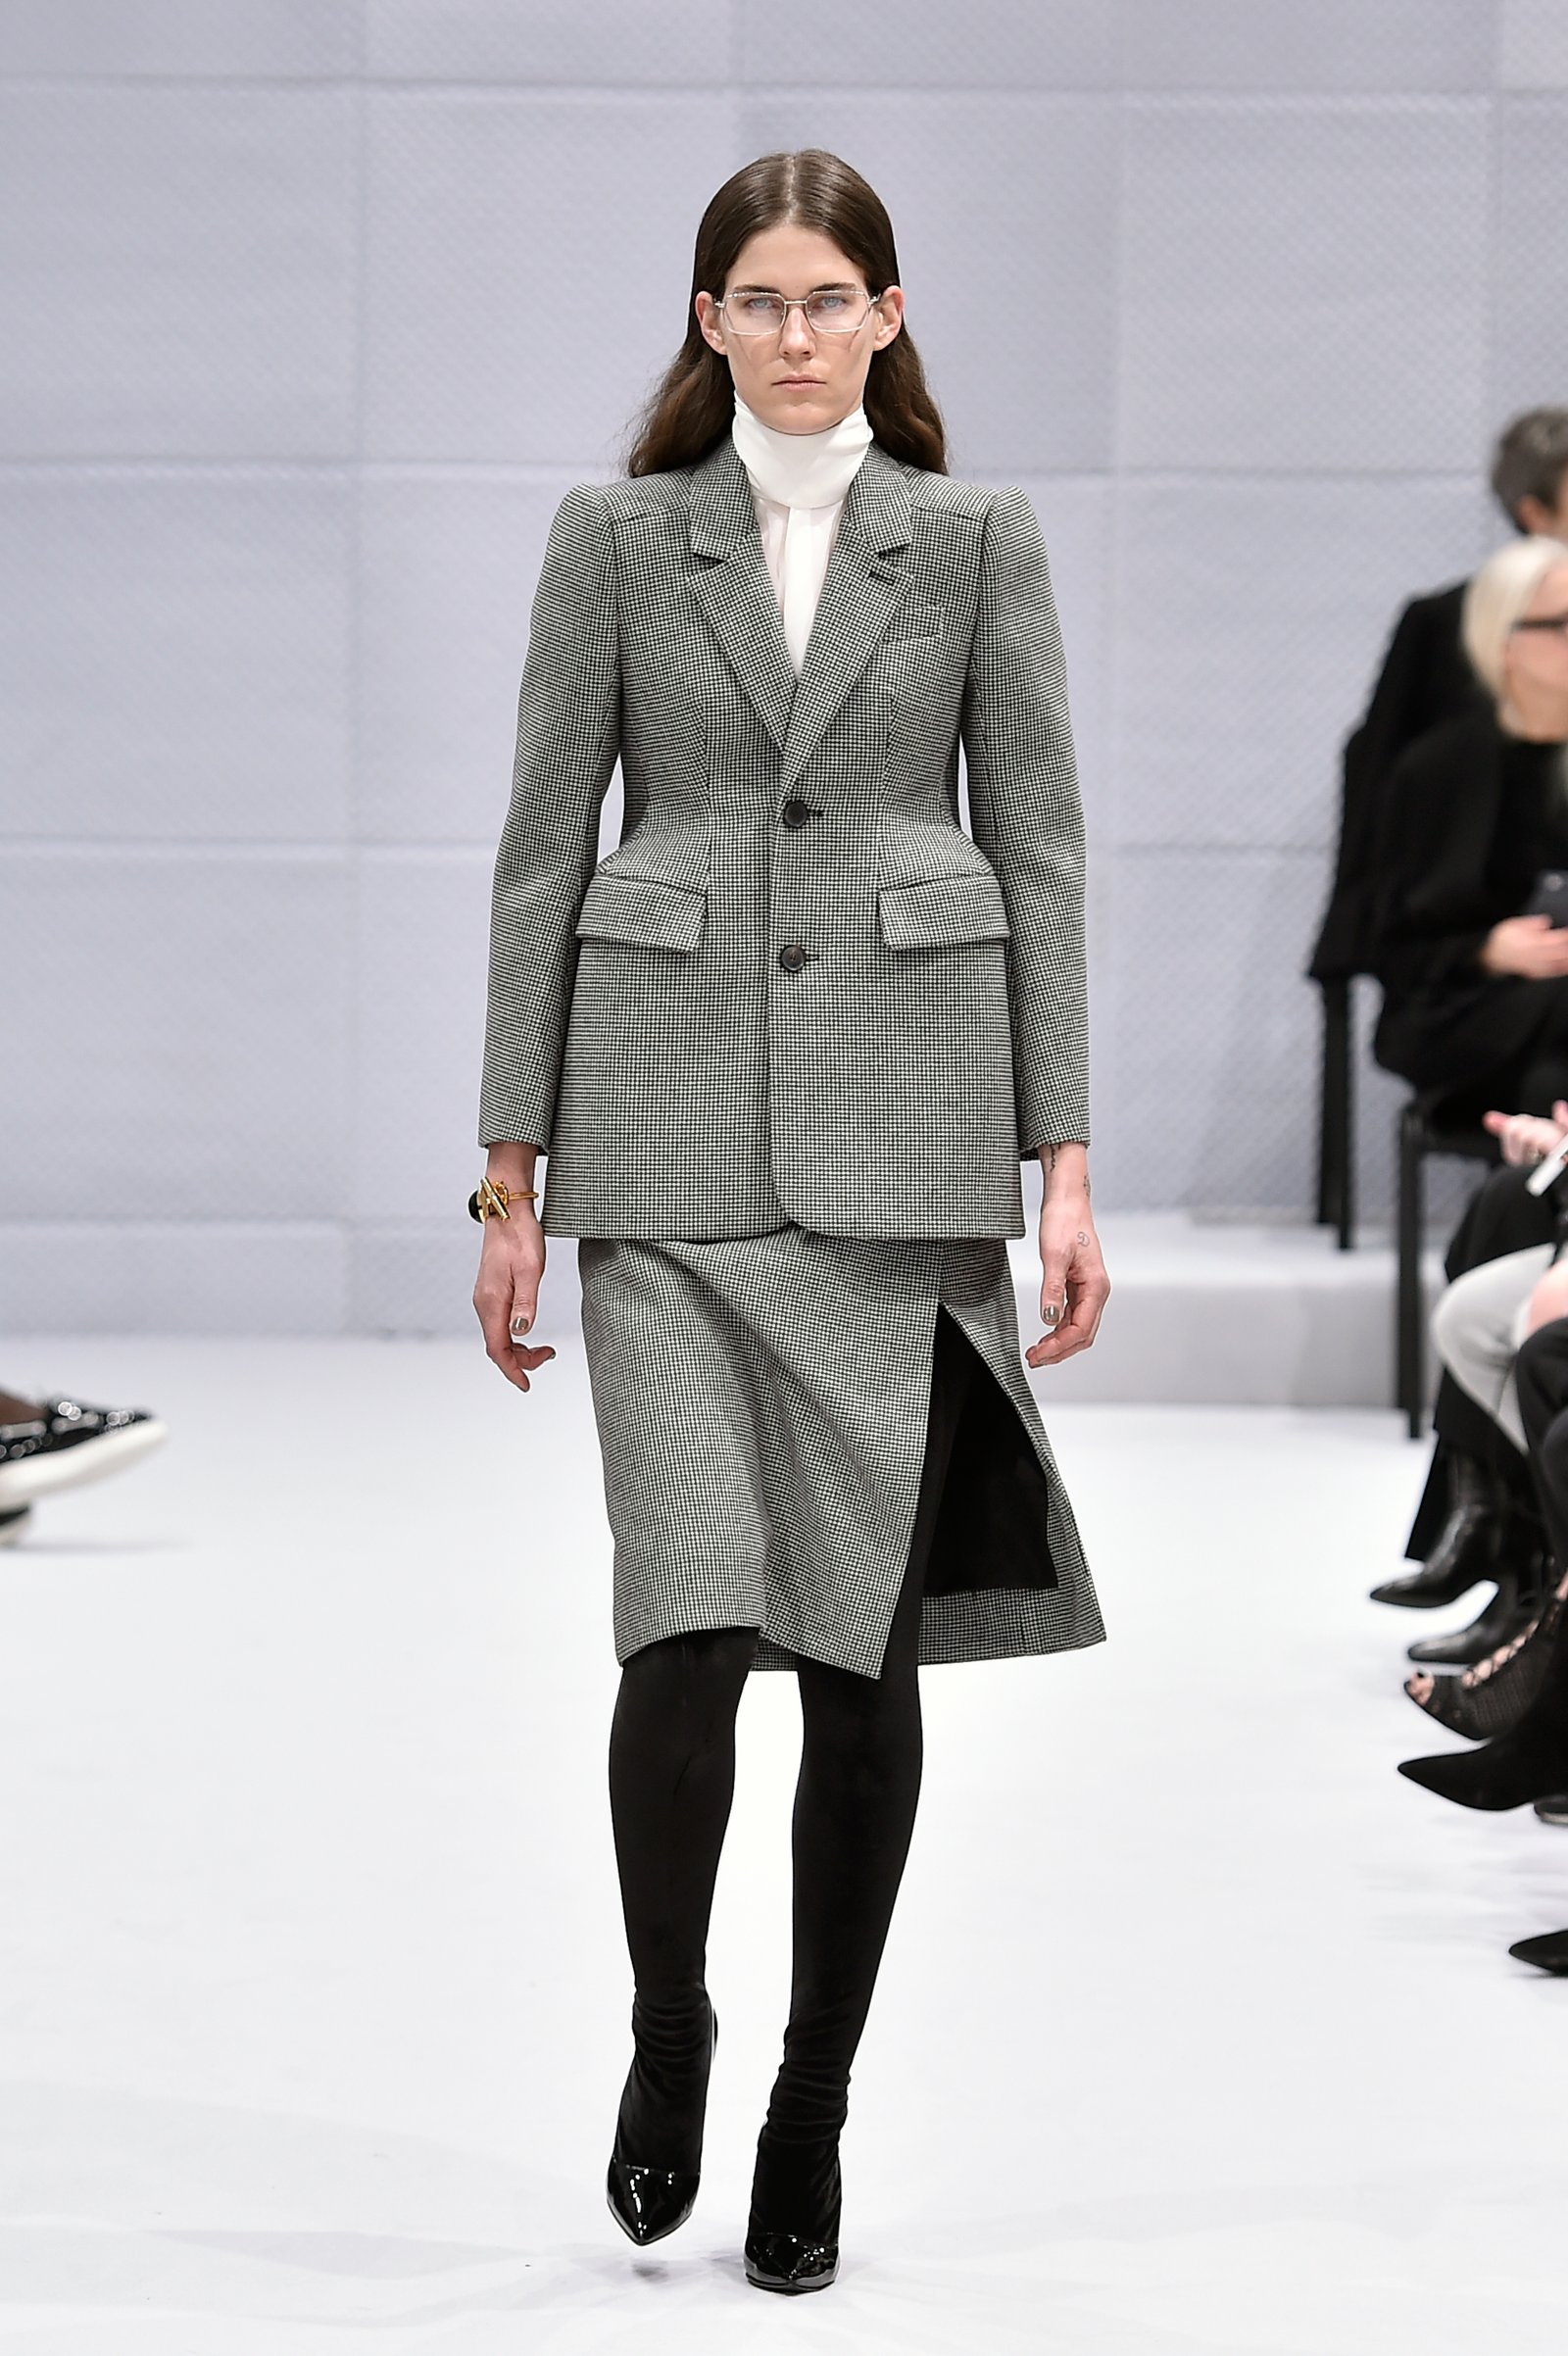 Skirt suit, wool and silk, Demna Gvasalia for Balenciaga, Paris, Autumn Winter 2016 ready-to-wear, look 1 -® Catwalking